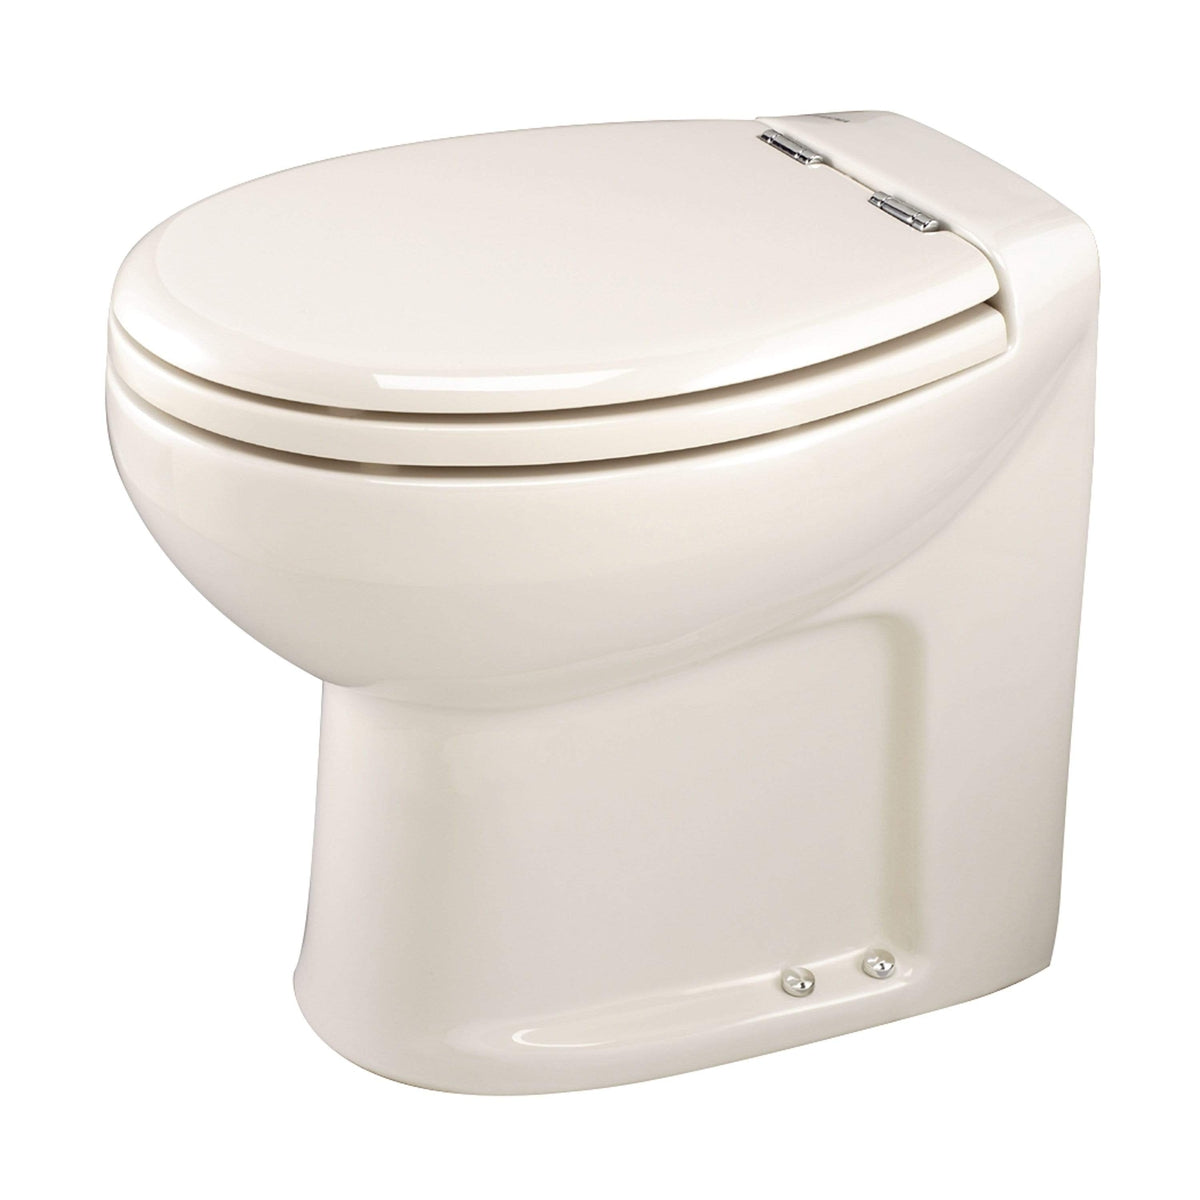 Thetford Not Qualified for Free Shipping Thetford Tecma Silence Plus 1 Mode 12v RV Toilet Bone #38025